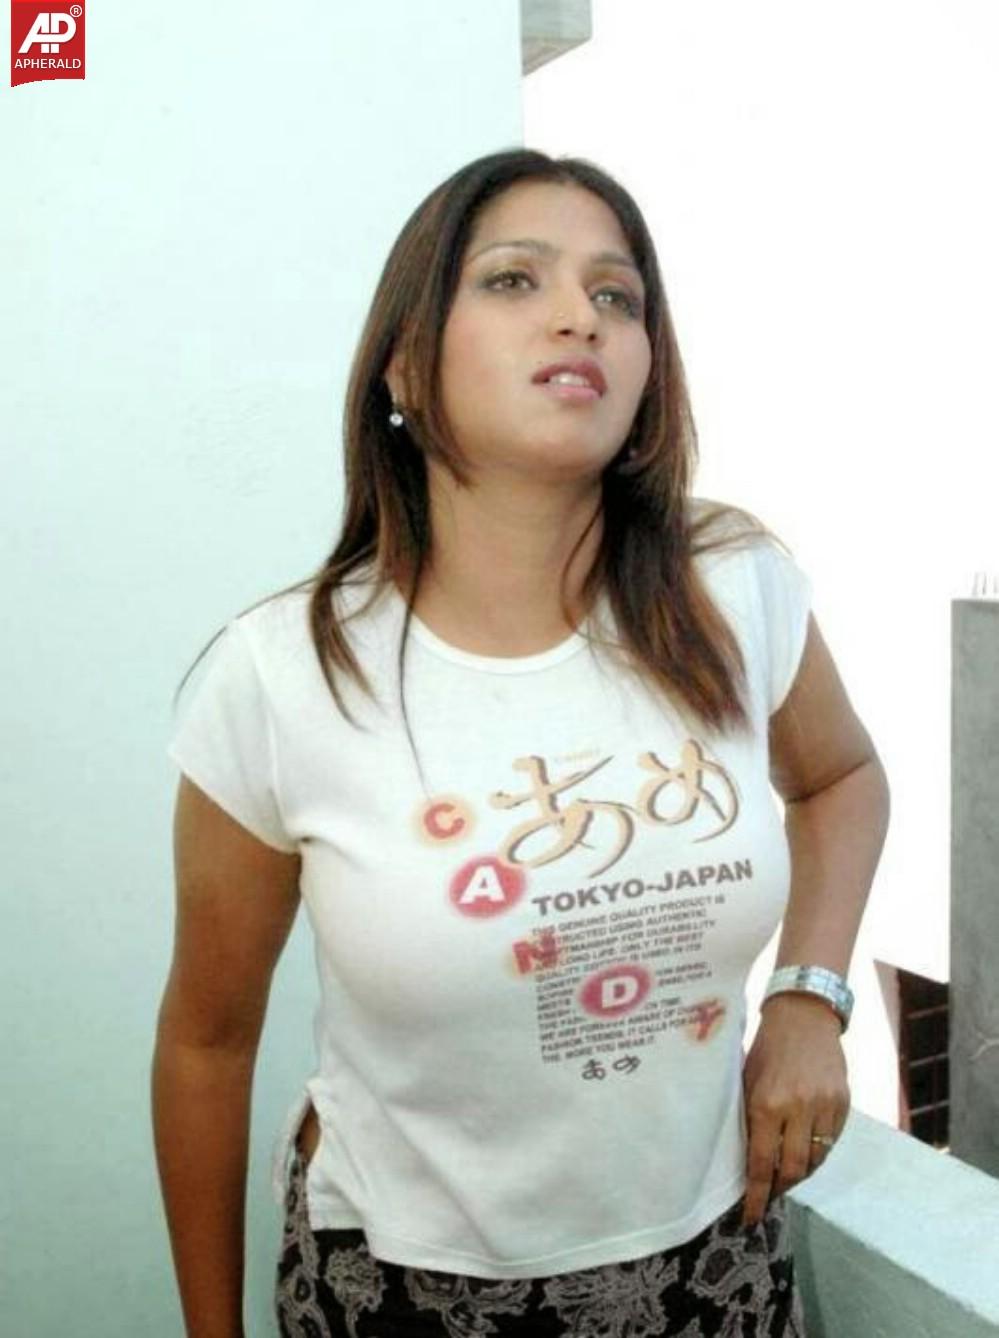 Tamil Actress Bhuvaneswari Hot Photos